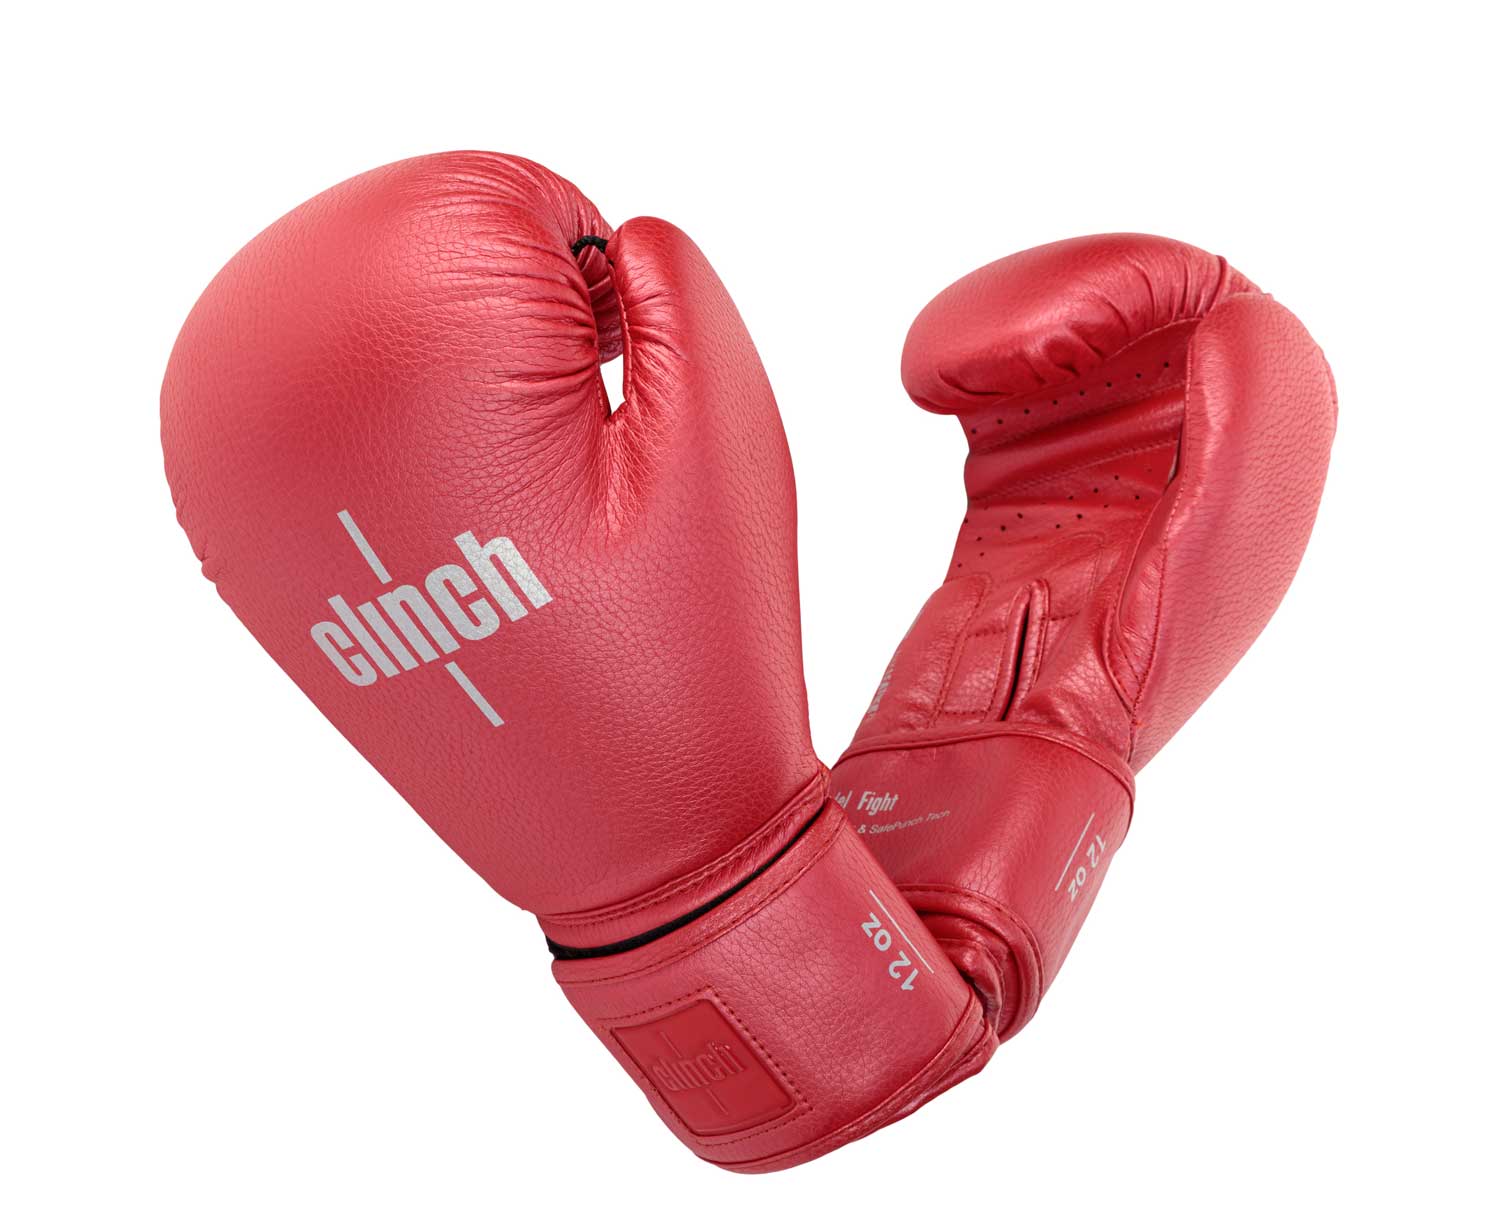 Перчатки боксерские Clinch Fight 2.0 красный металлик